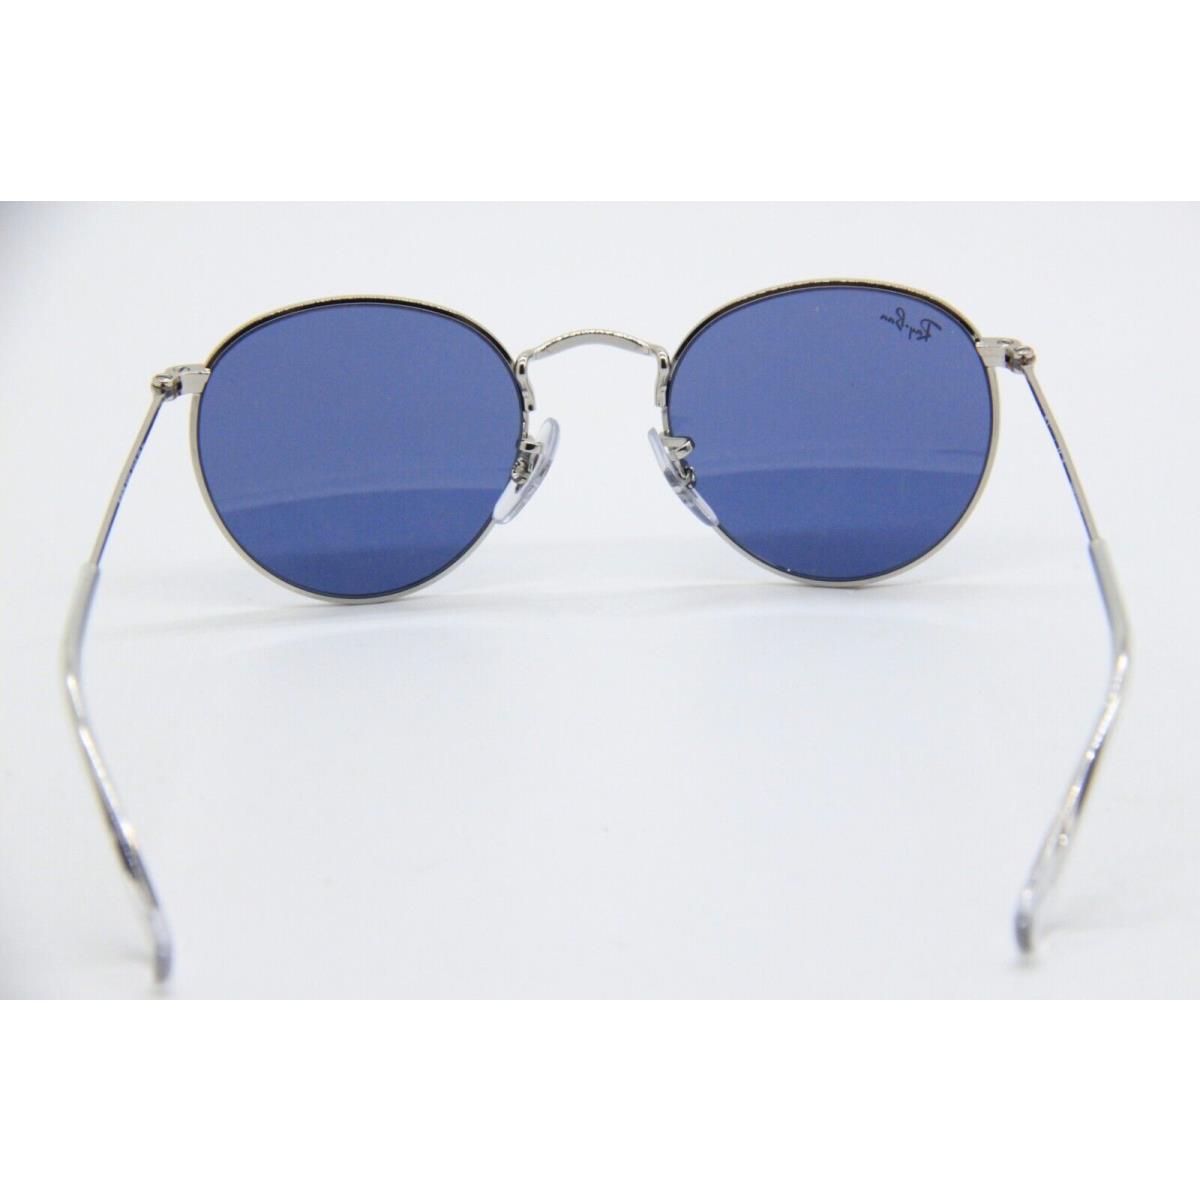 Ray-Ban sunglasses  - Frame: Silver, Lens: Blue 2